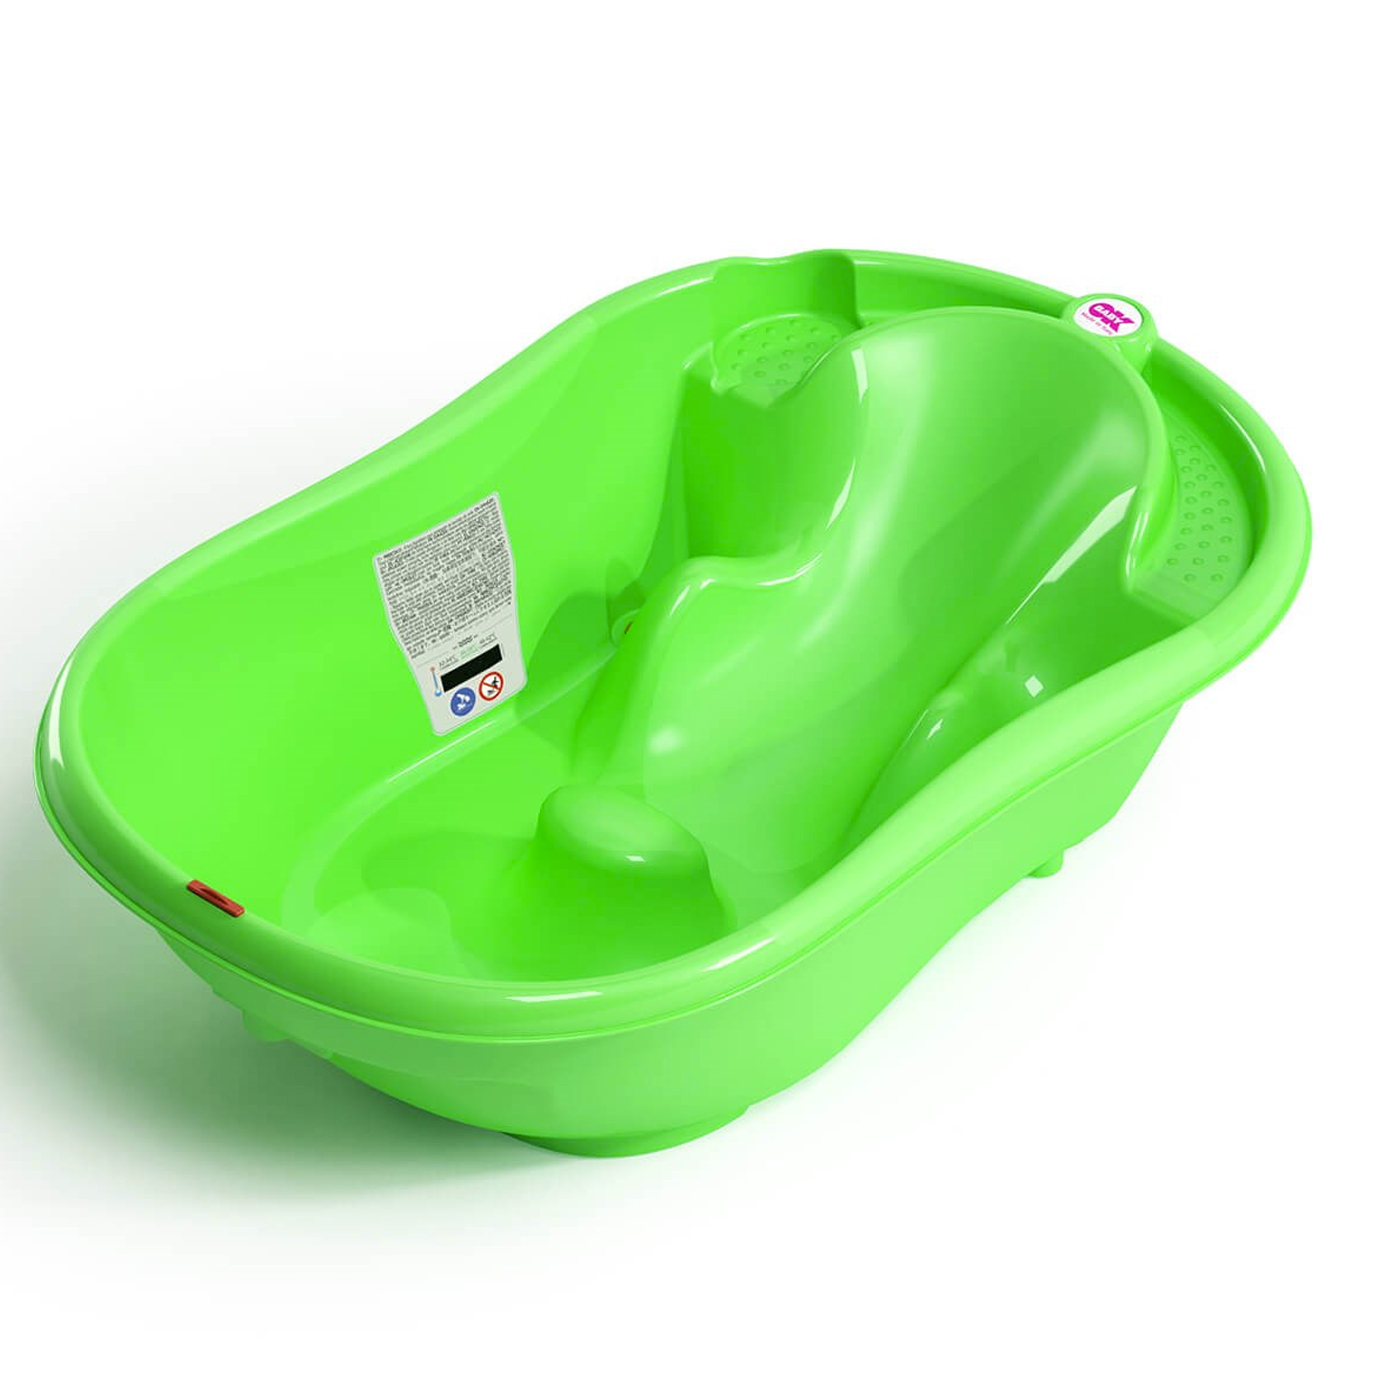  OkBaby Onda Banyo Küveti | Yeşil